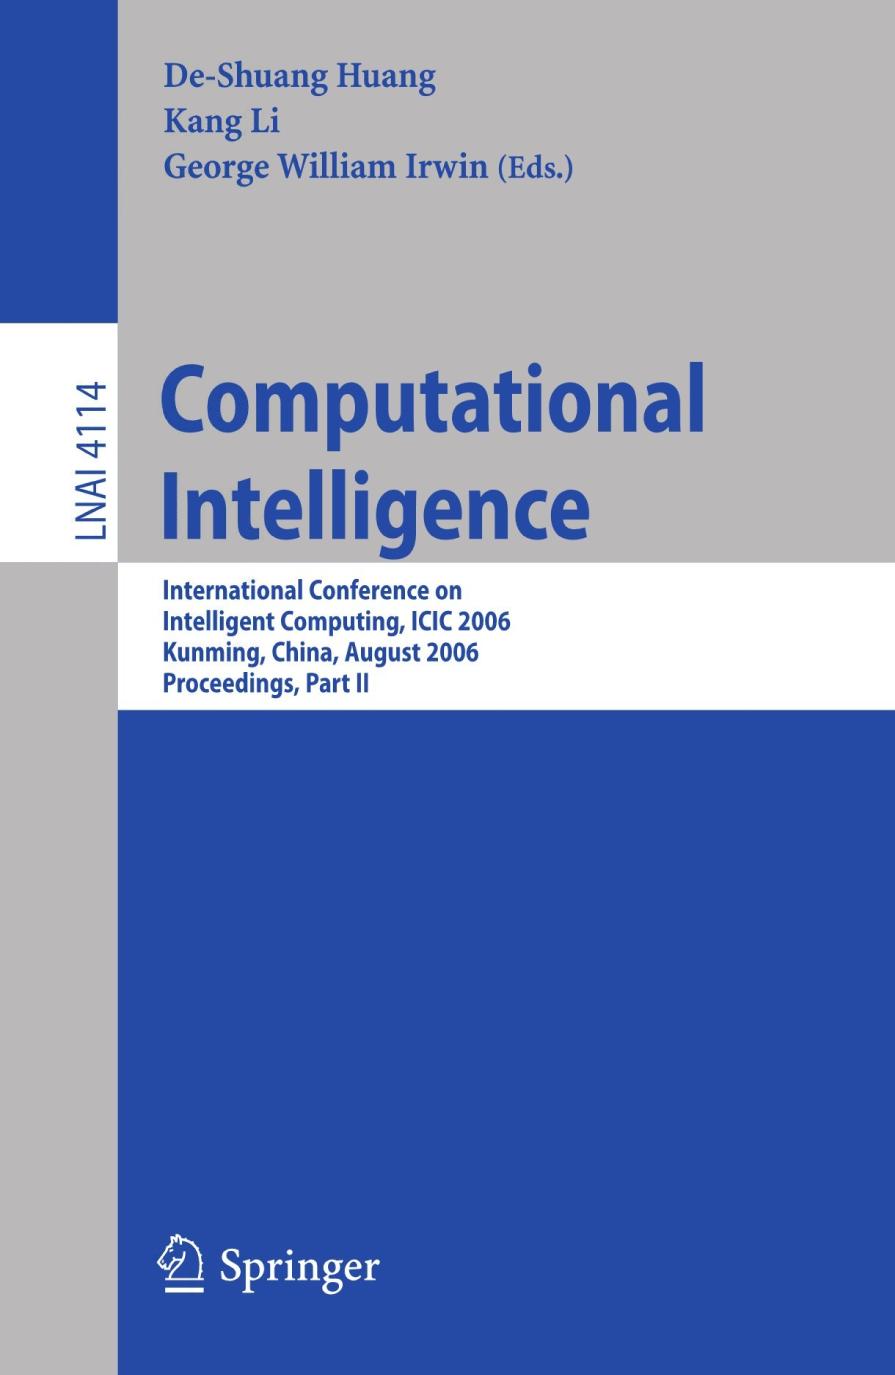 Computational Intelligence : International Conference on Intelligent Computing, ICIC 2006, Kunming, China, August 16-19, 2006. Proceedings, Part II